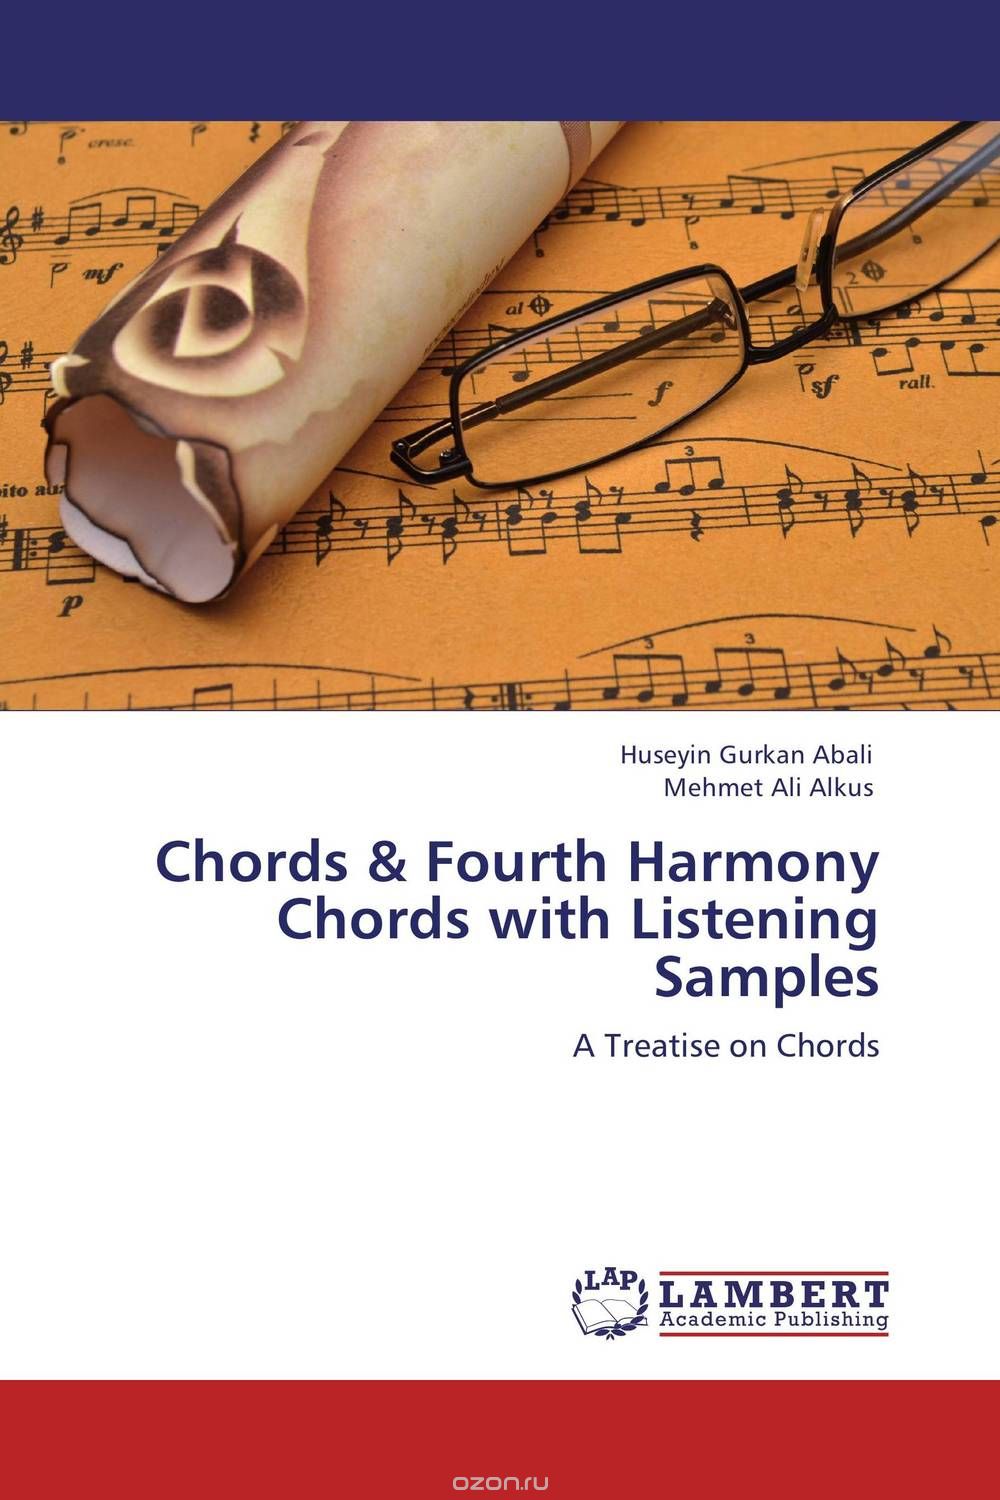 Скачать книгу "Chords & Fourth Harmony Chords with Listening Samples"